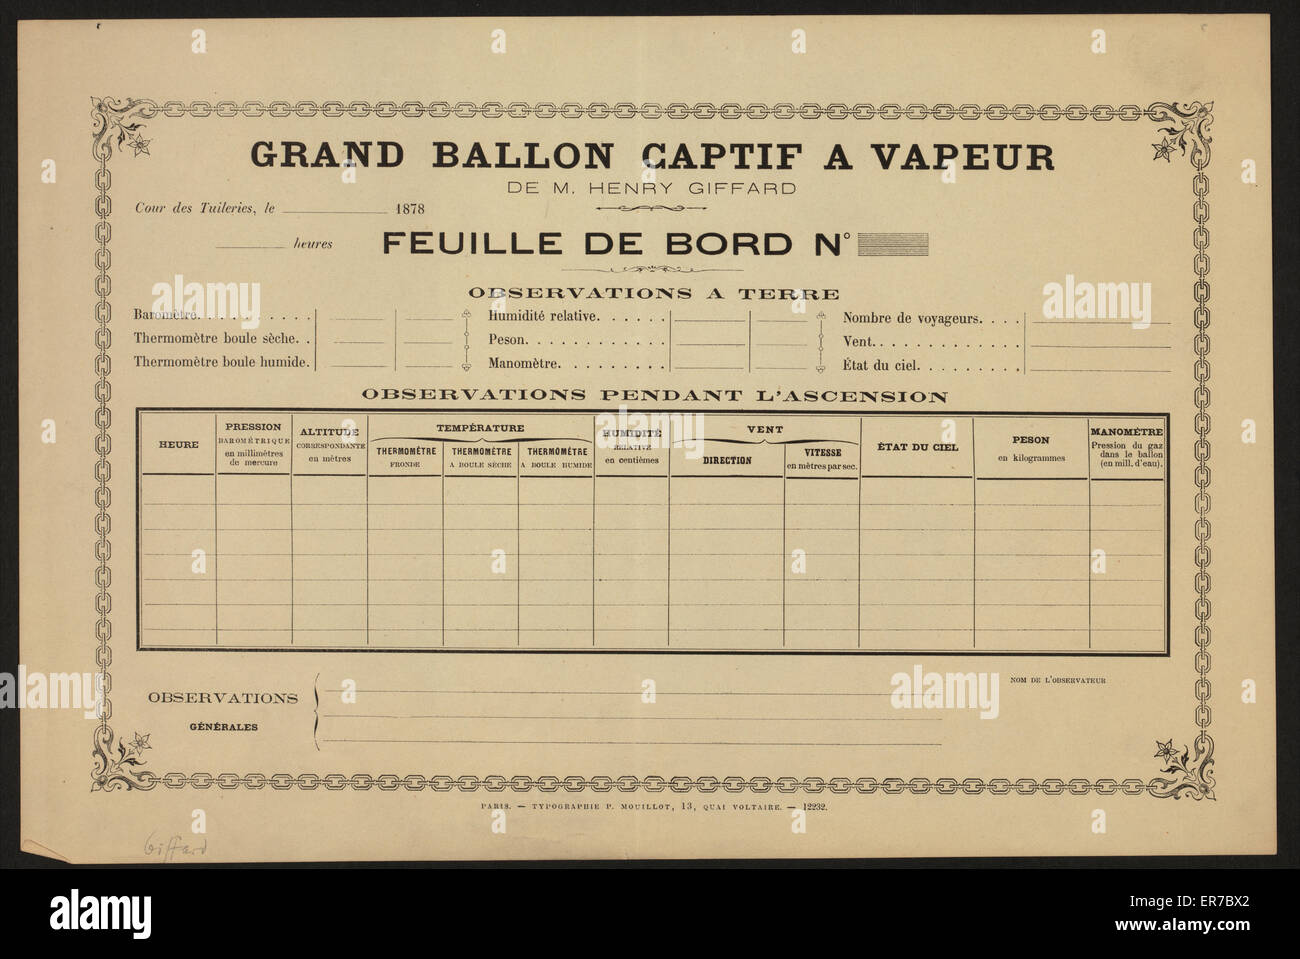 Grand Ballon Captif a Vapeur, de M. Henry Giffard Text Stockfoto